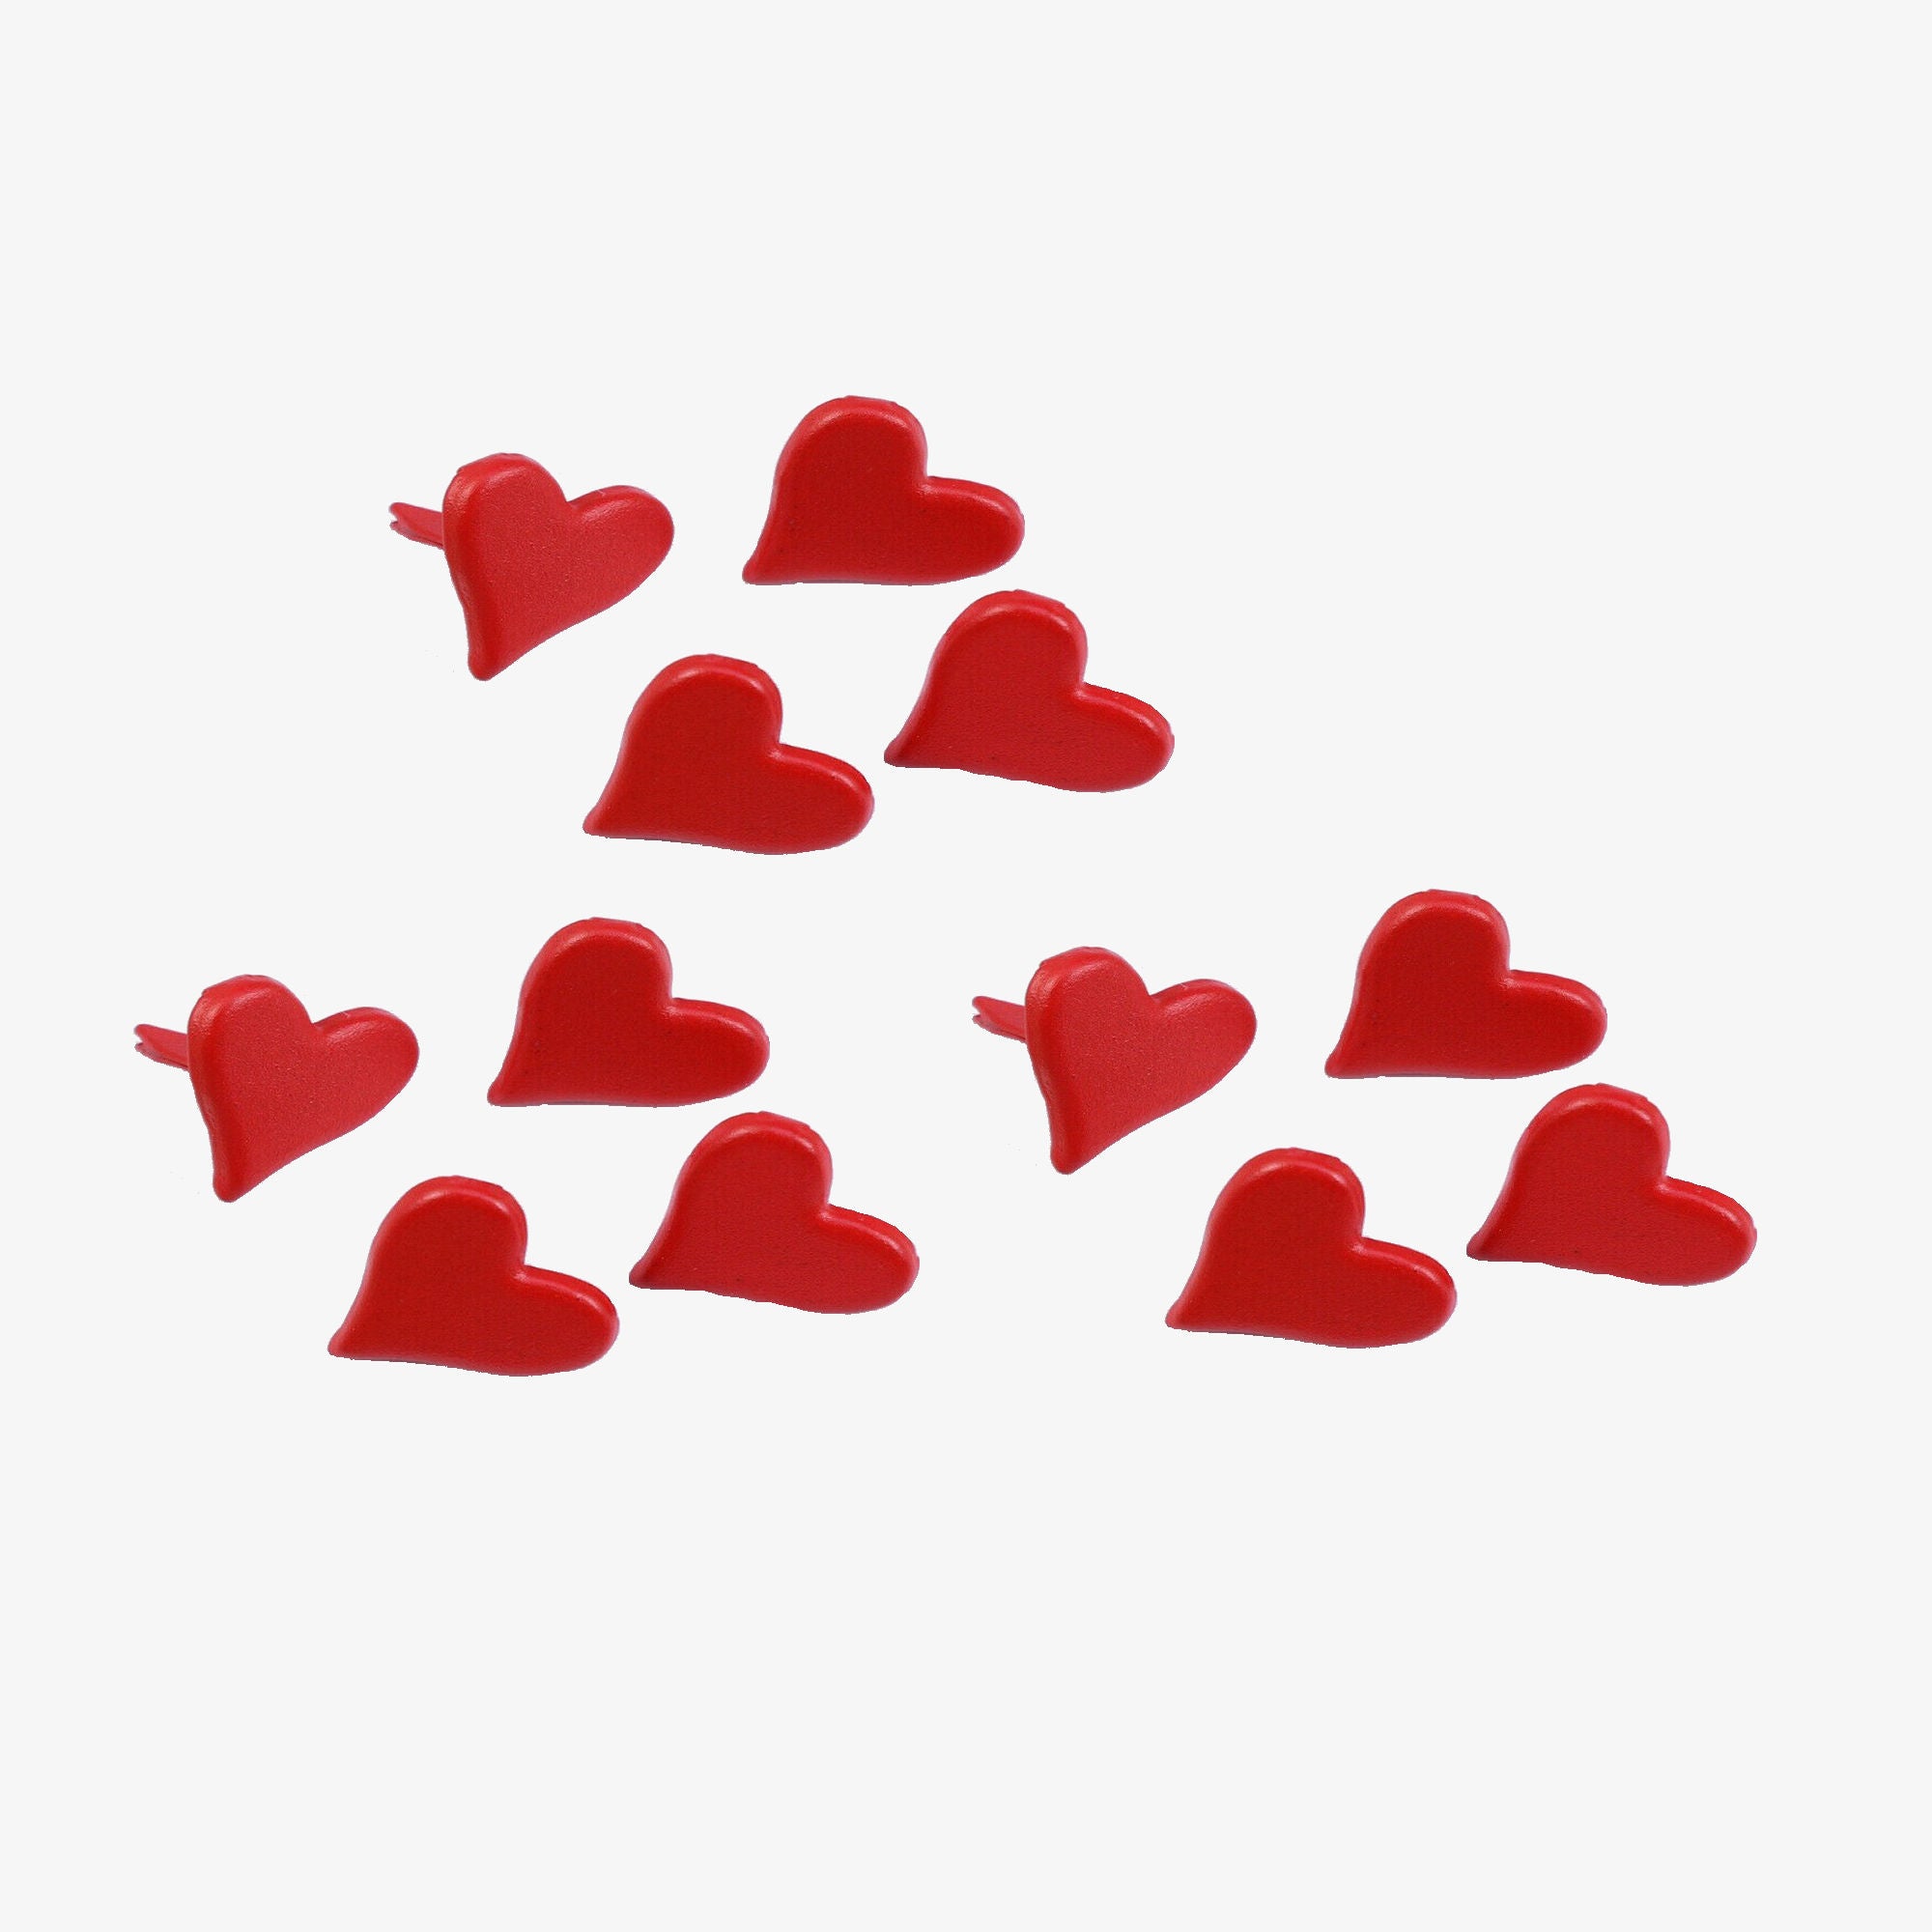 Red Heart Brads by SSC Designs - 12 Brads